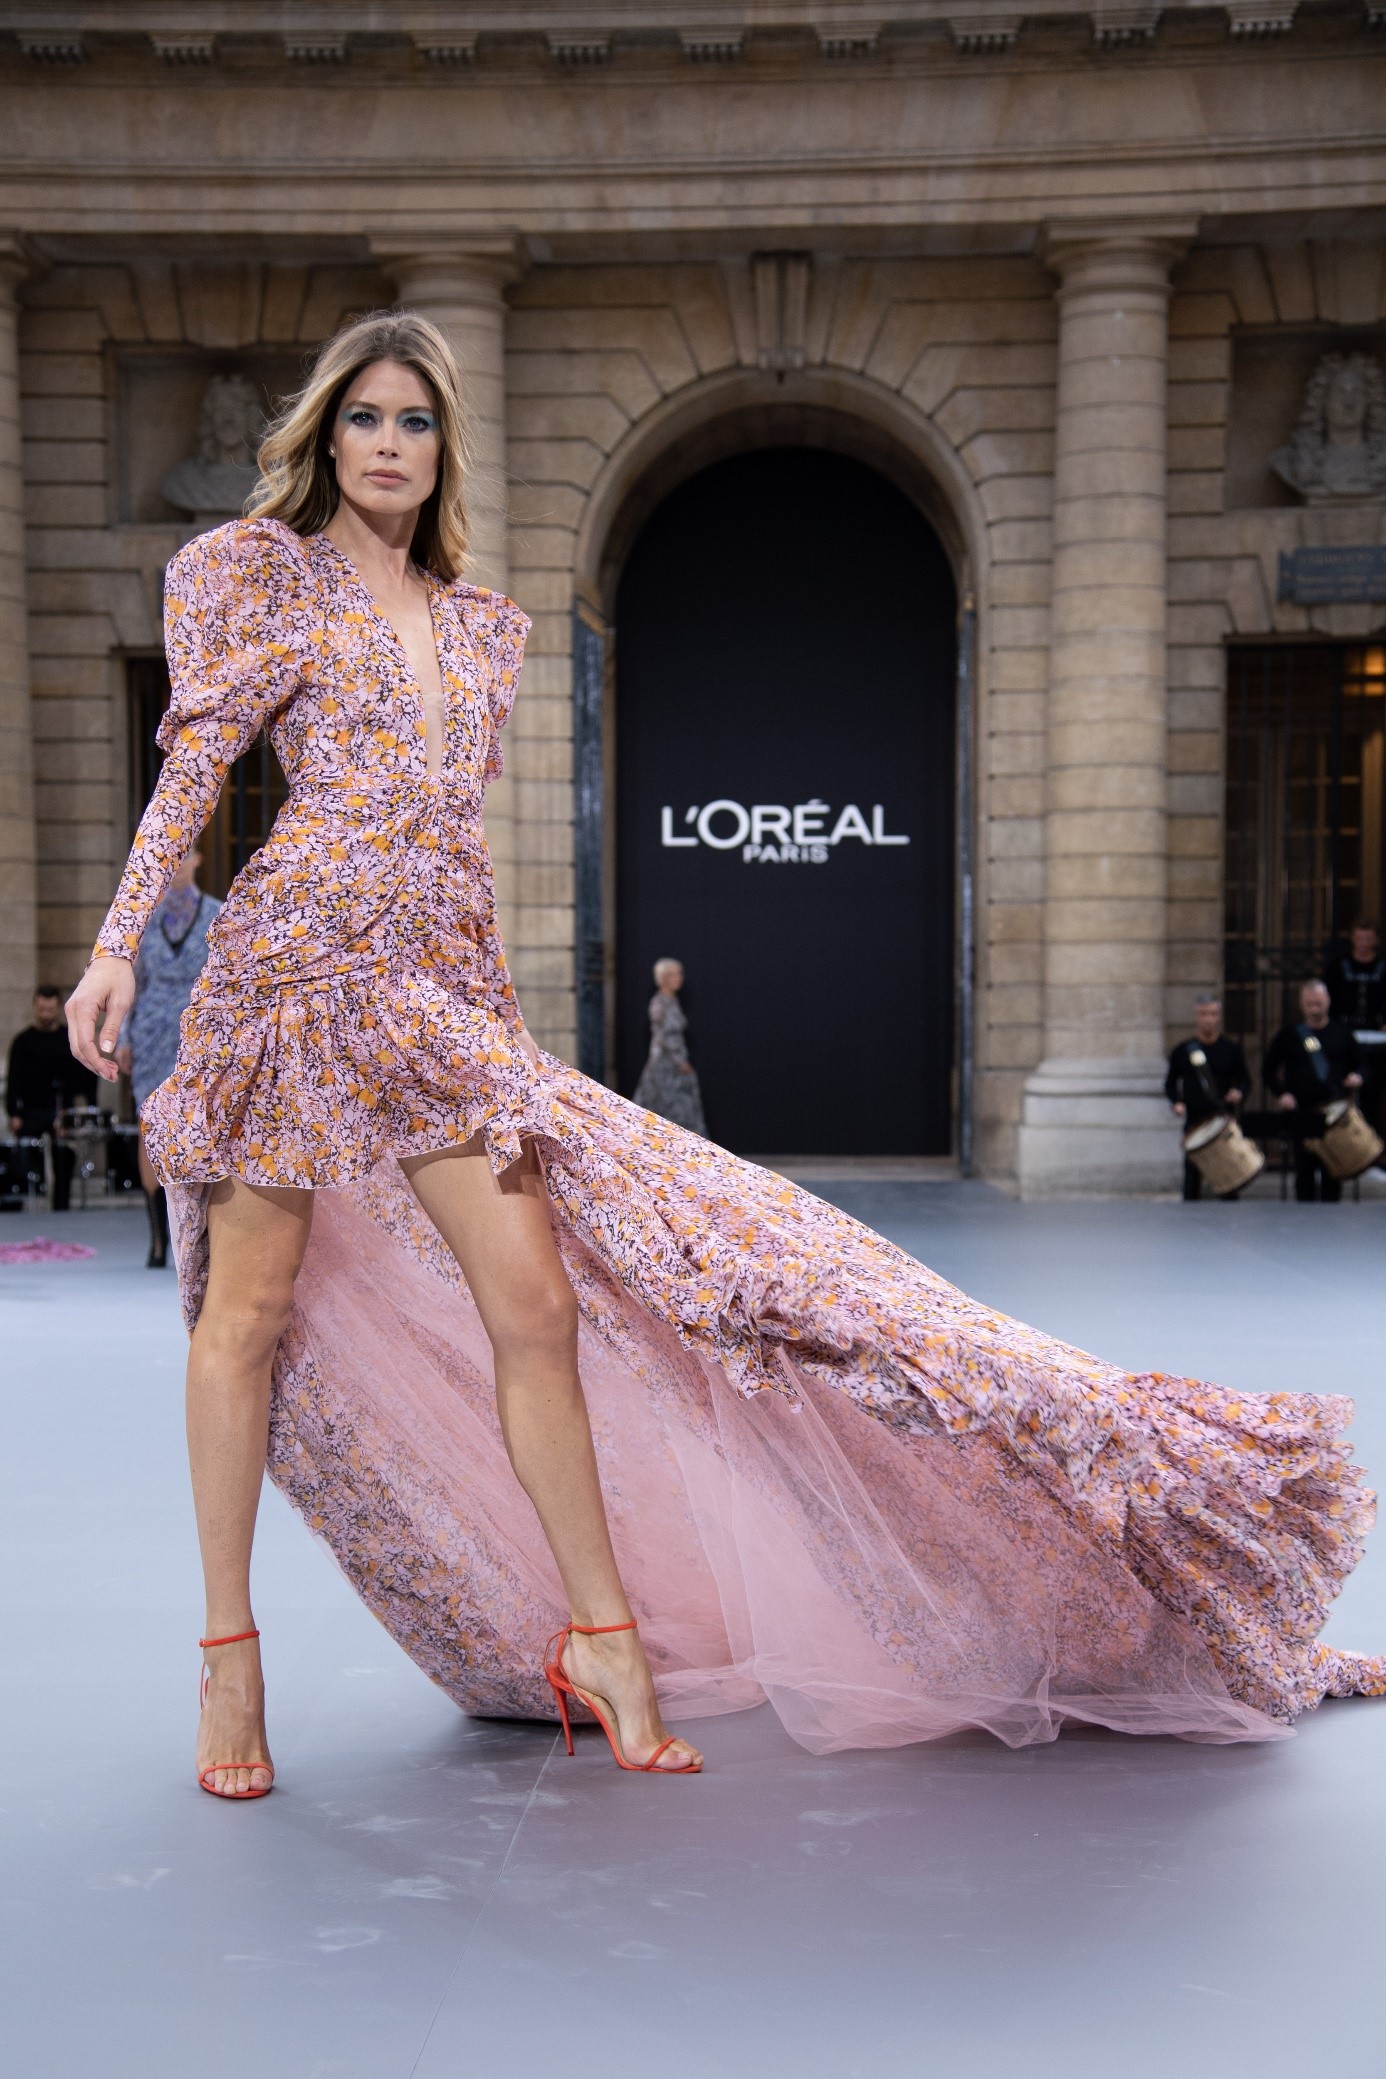 Lễ hội làm đẹp của L’Oréal Paris tại Tuần lễ thời trang Paris